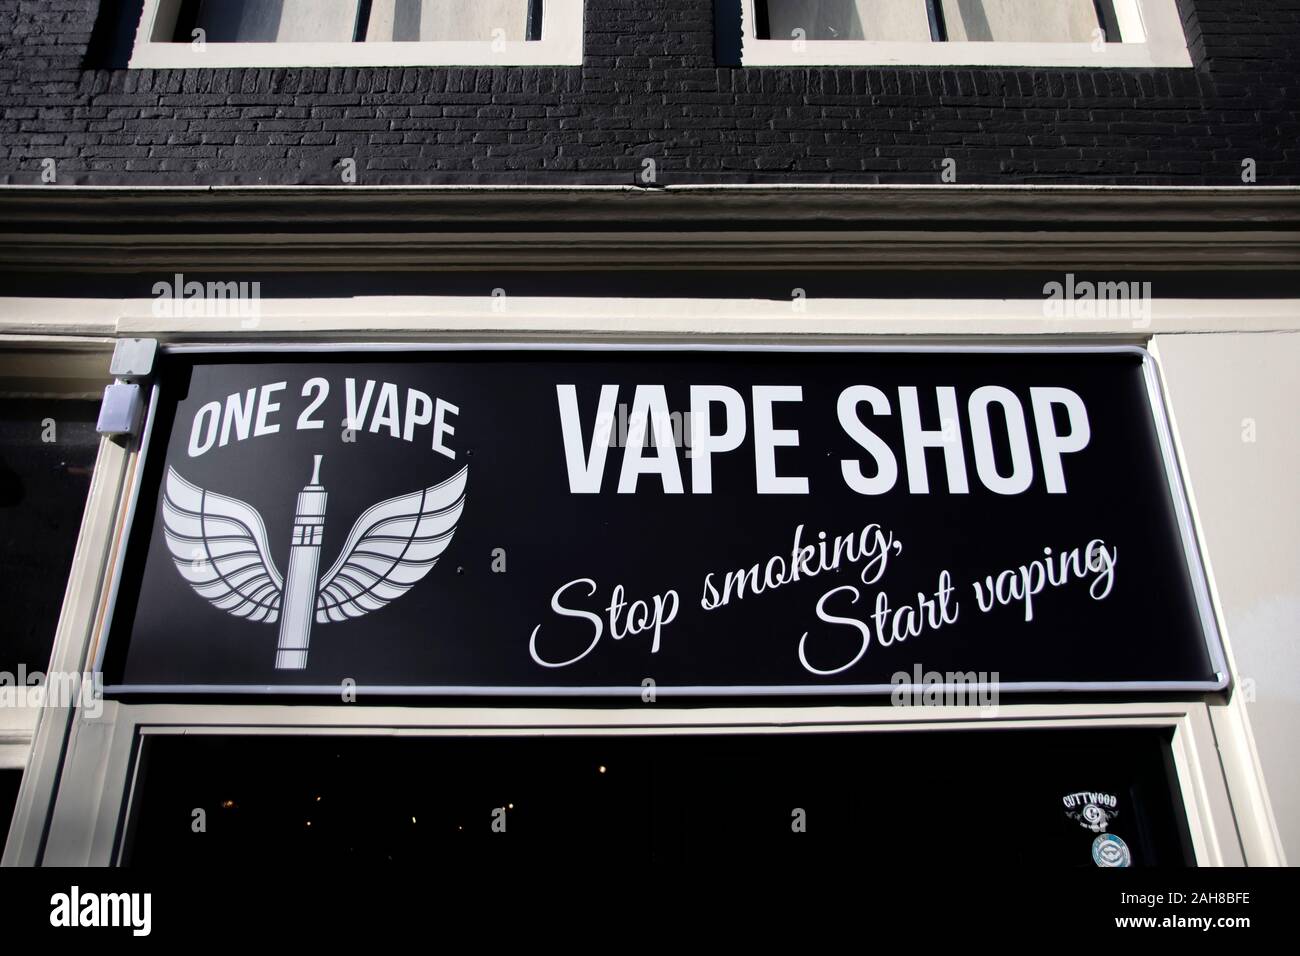 One 2 Vape Shop At Amsterdam The Netherlands 2019 Stock Photo - Alamy